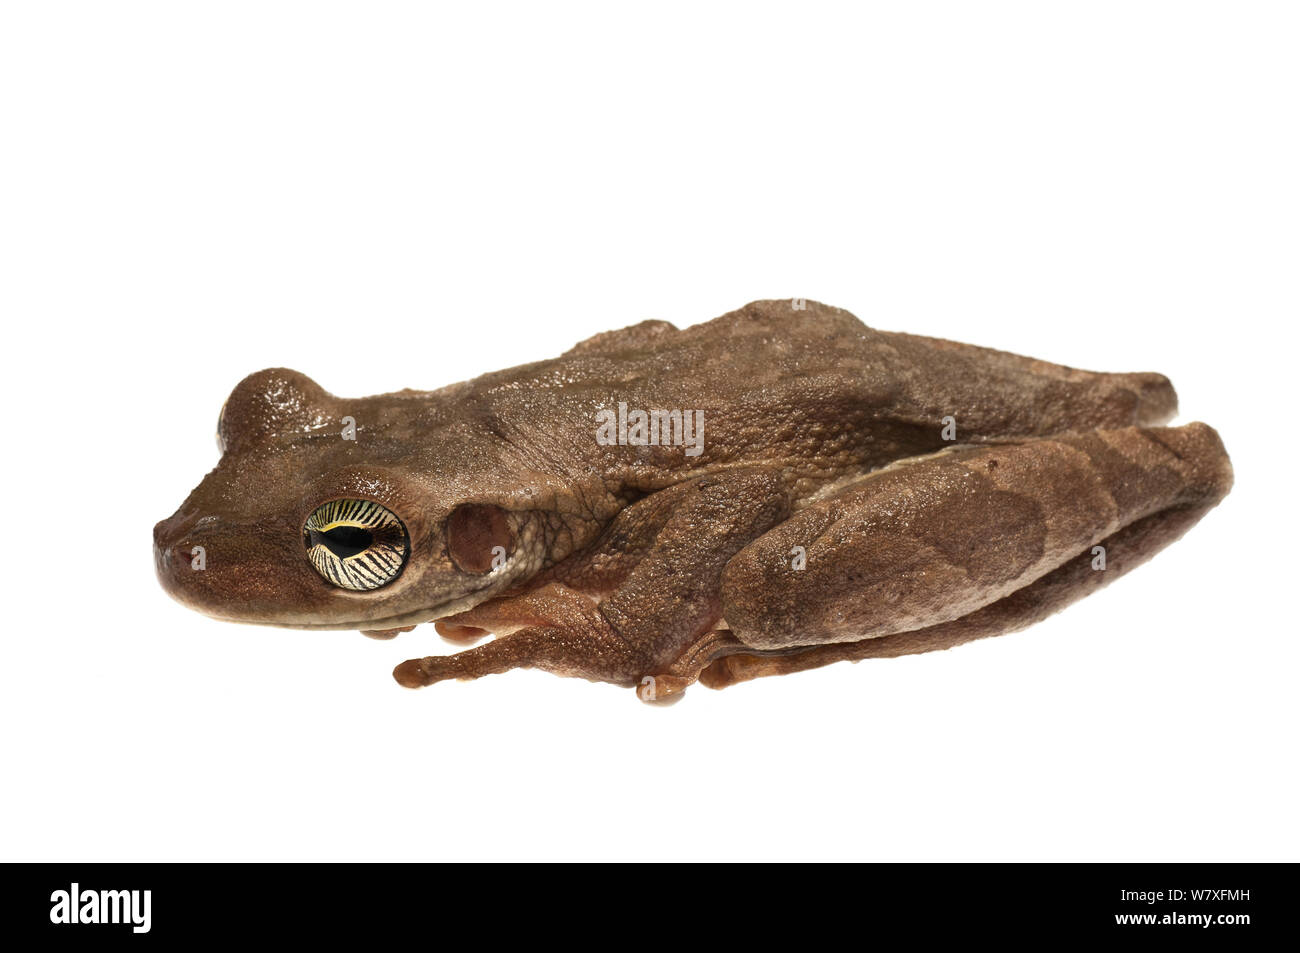 Manaus slender legged frog (Osteocephalus taurinus), Berbice River, Guyana, September. Meetyourneighbours.net project. Stock Photo